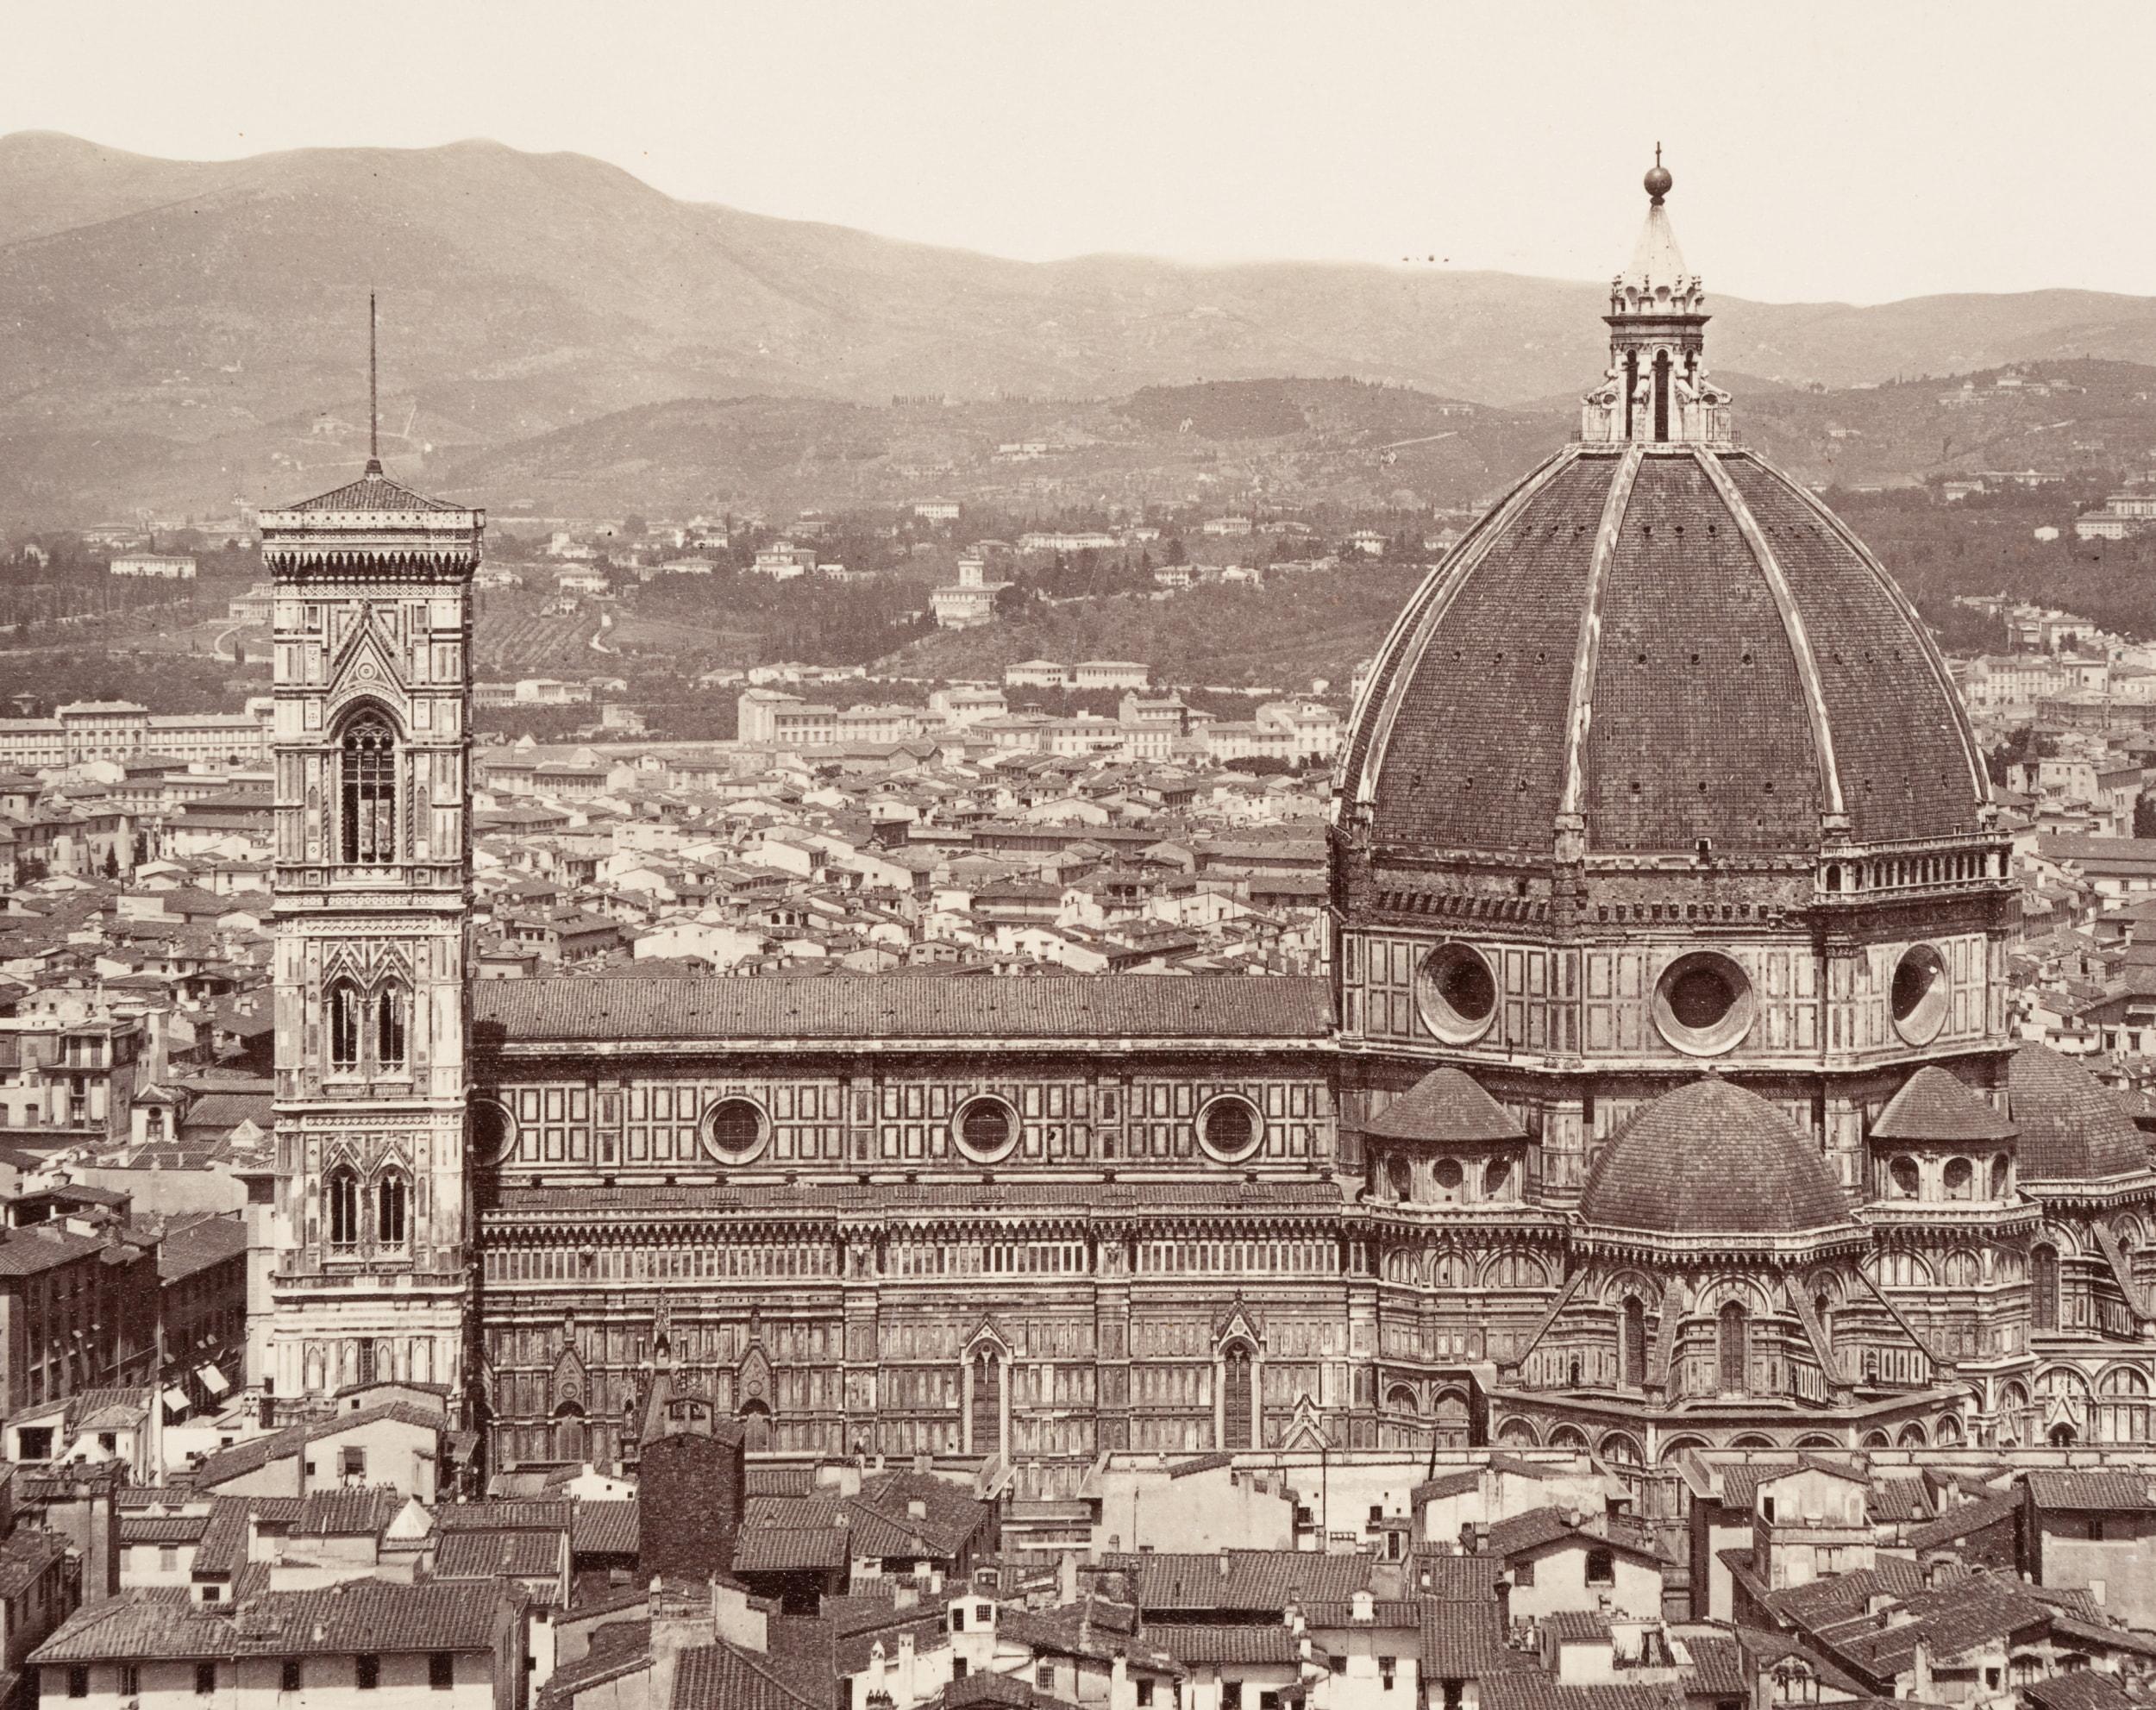 Dom, Duomo, Florenz - Photograph by Fratelli Alinari